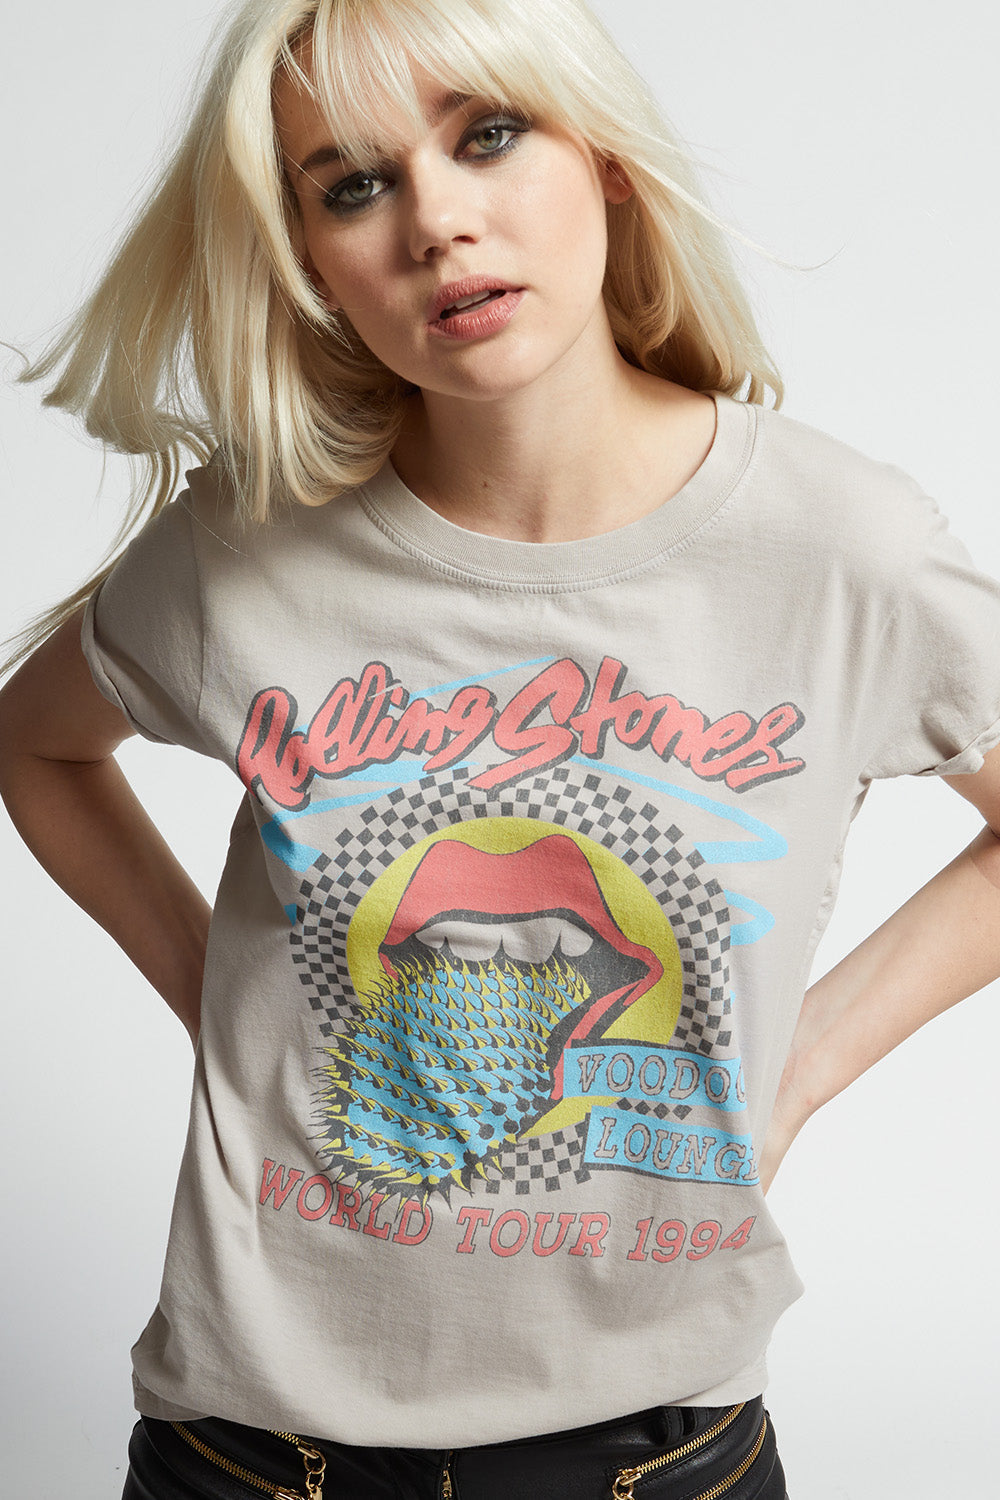 Rolling Stones World Tour Tshirt